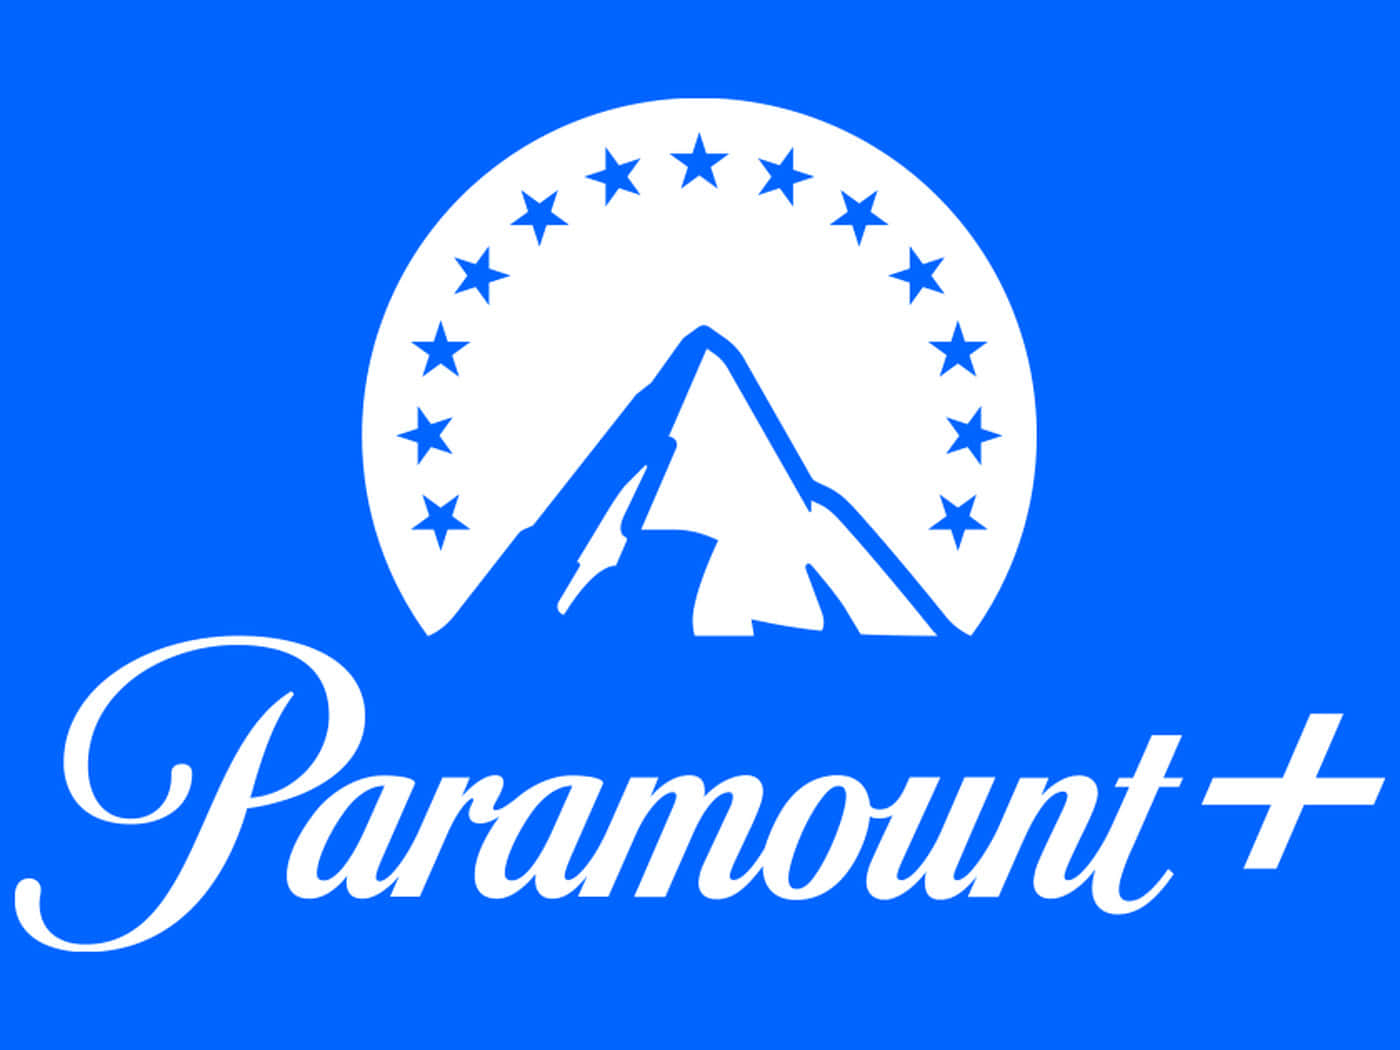 Paramount Logo Picture